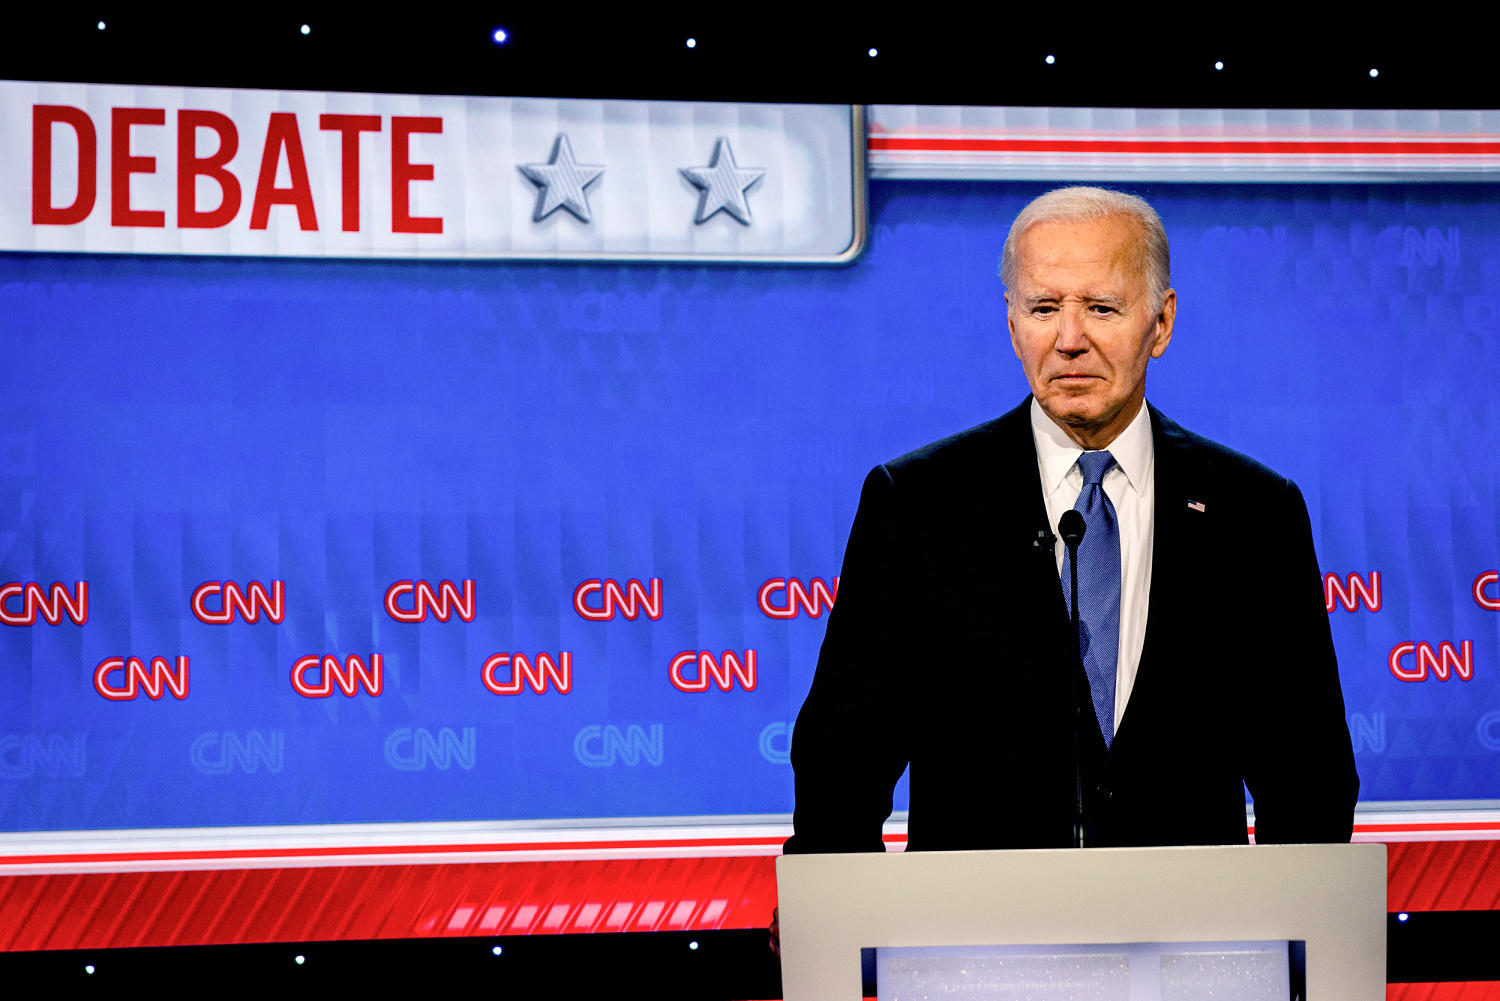 Biden quips that he 'almost fell asleep onstage' at debate